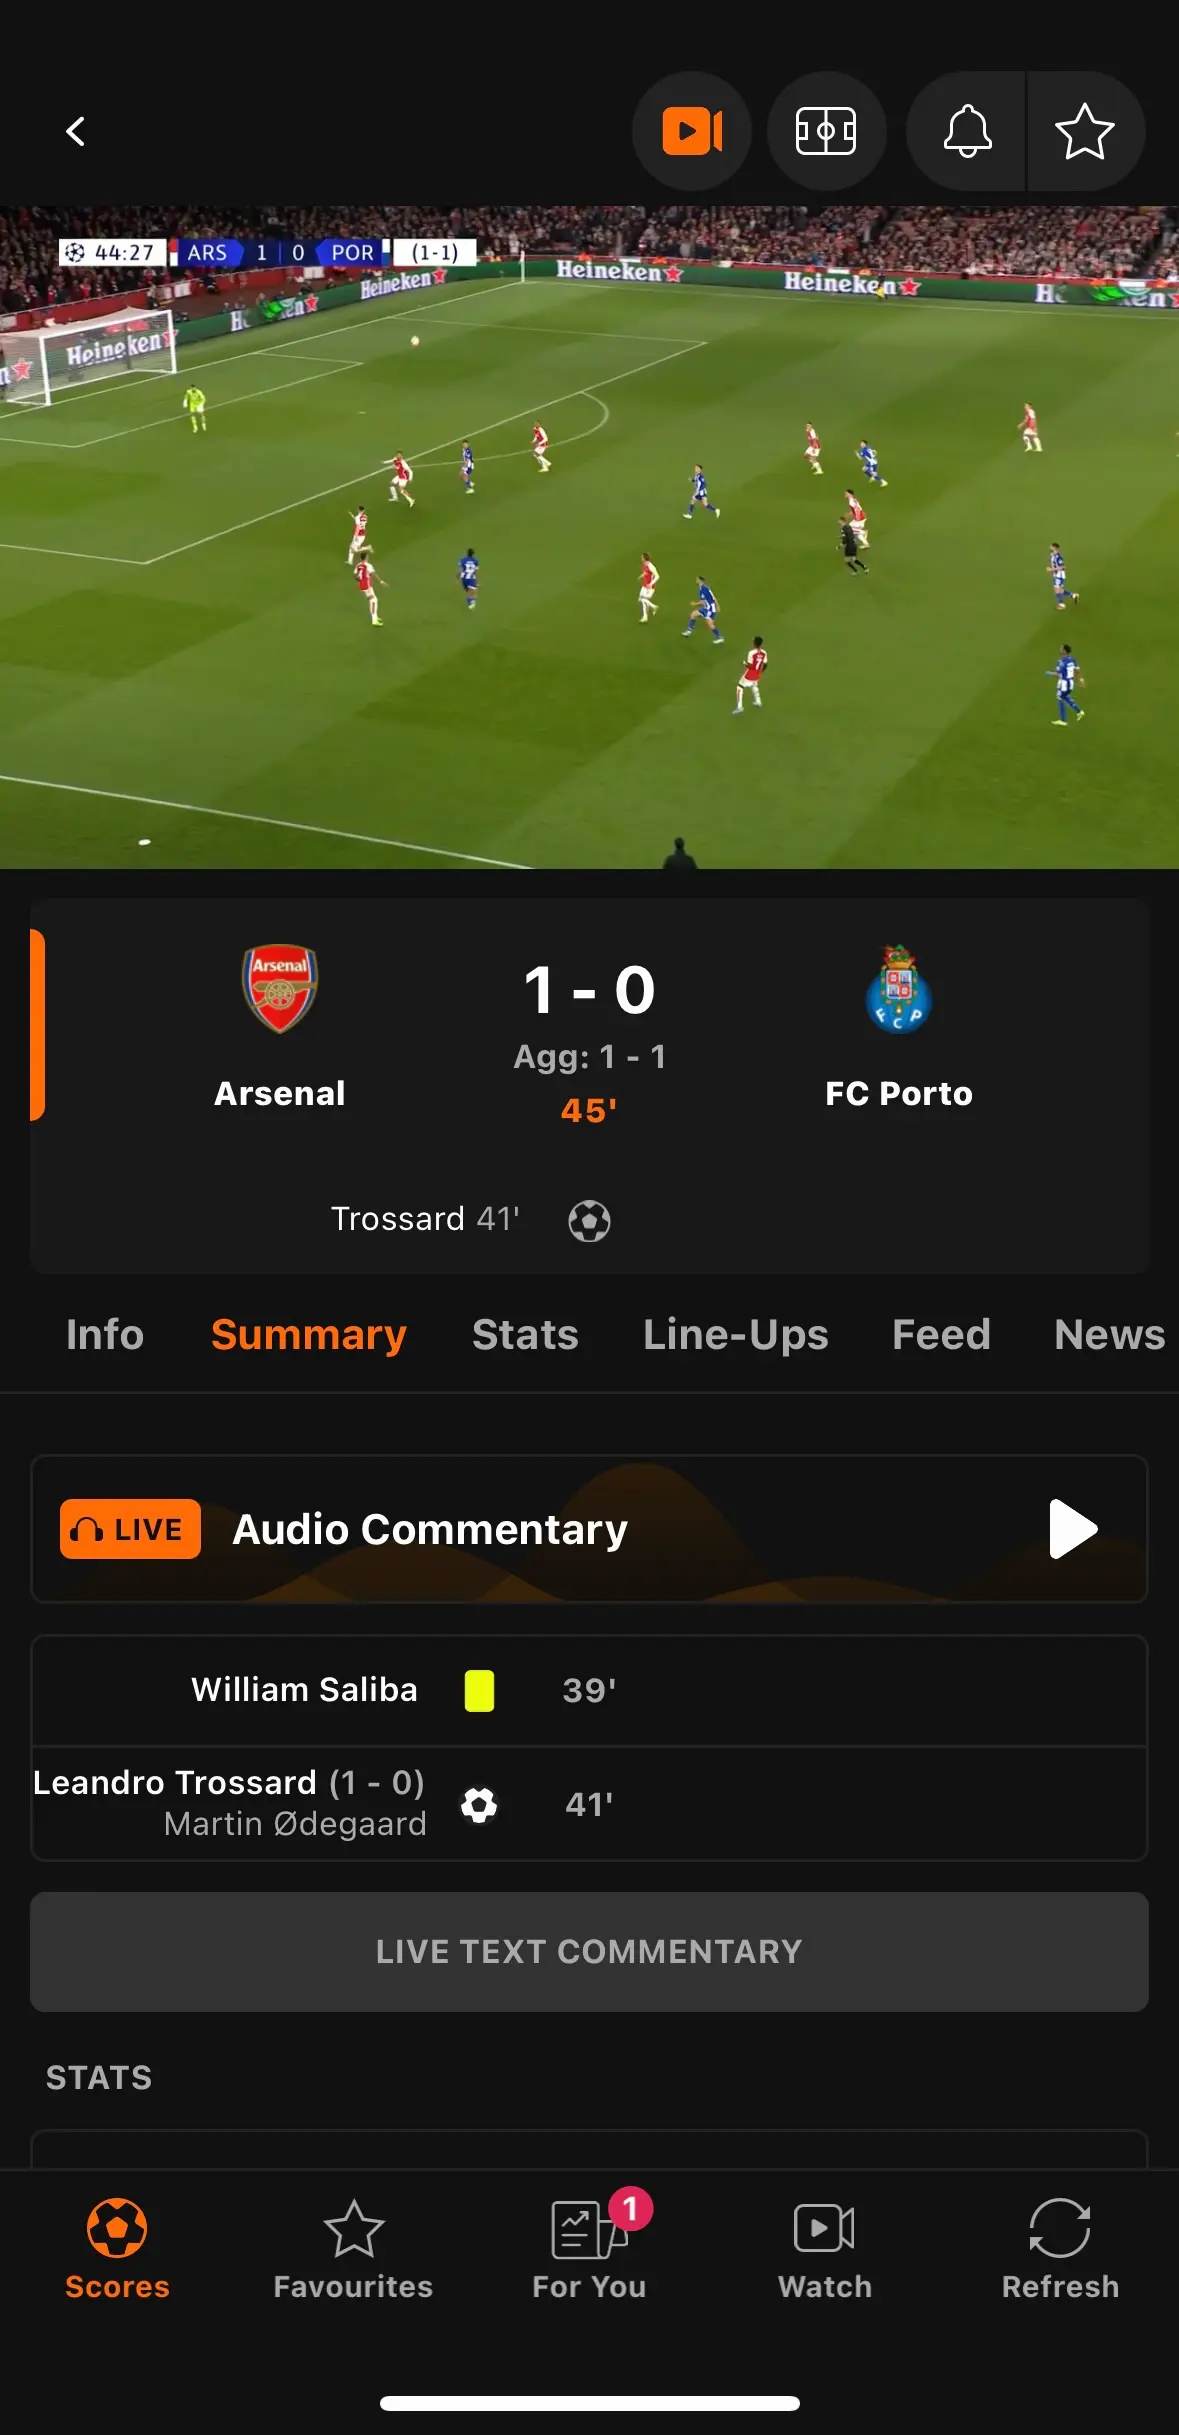 Watching Arsenal vs Porto in the UCL via LiveScore Ireland's iOS app.